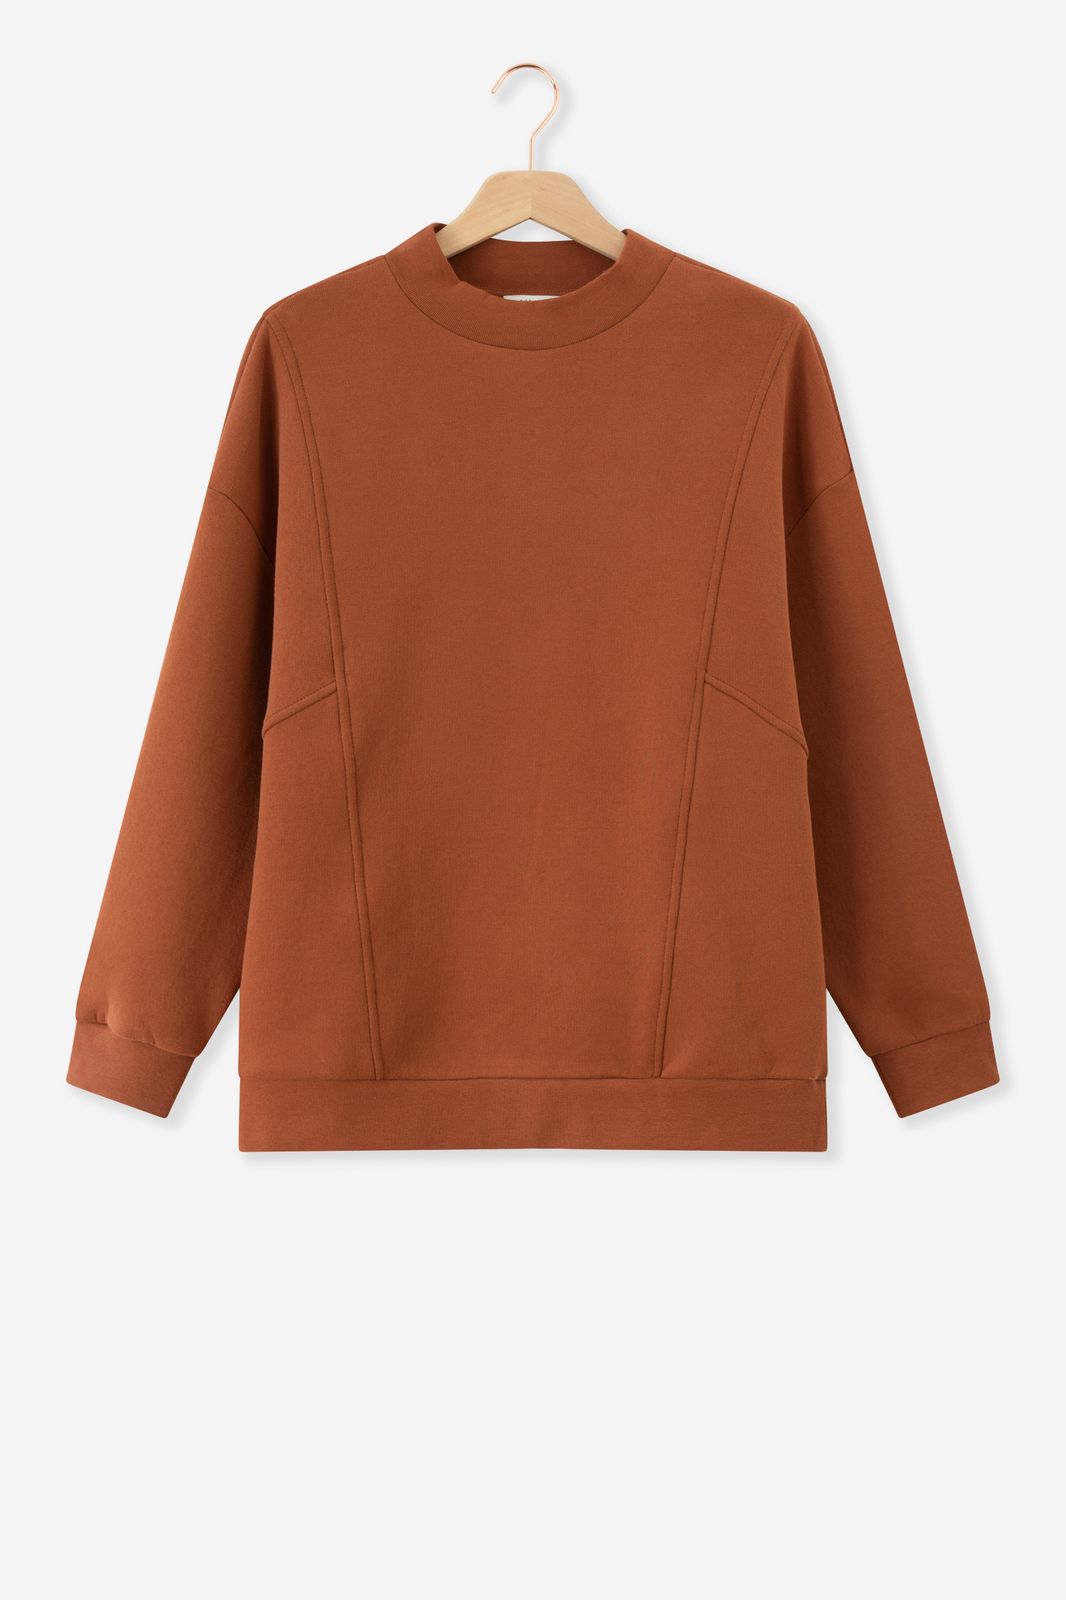 Bruine oversized sweater